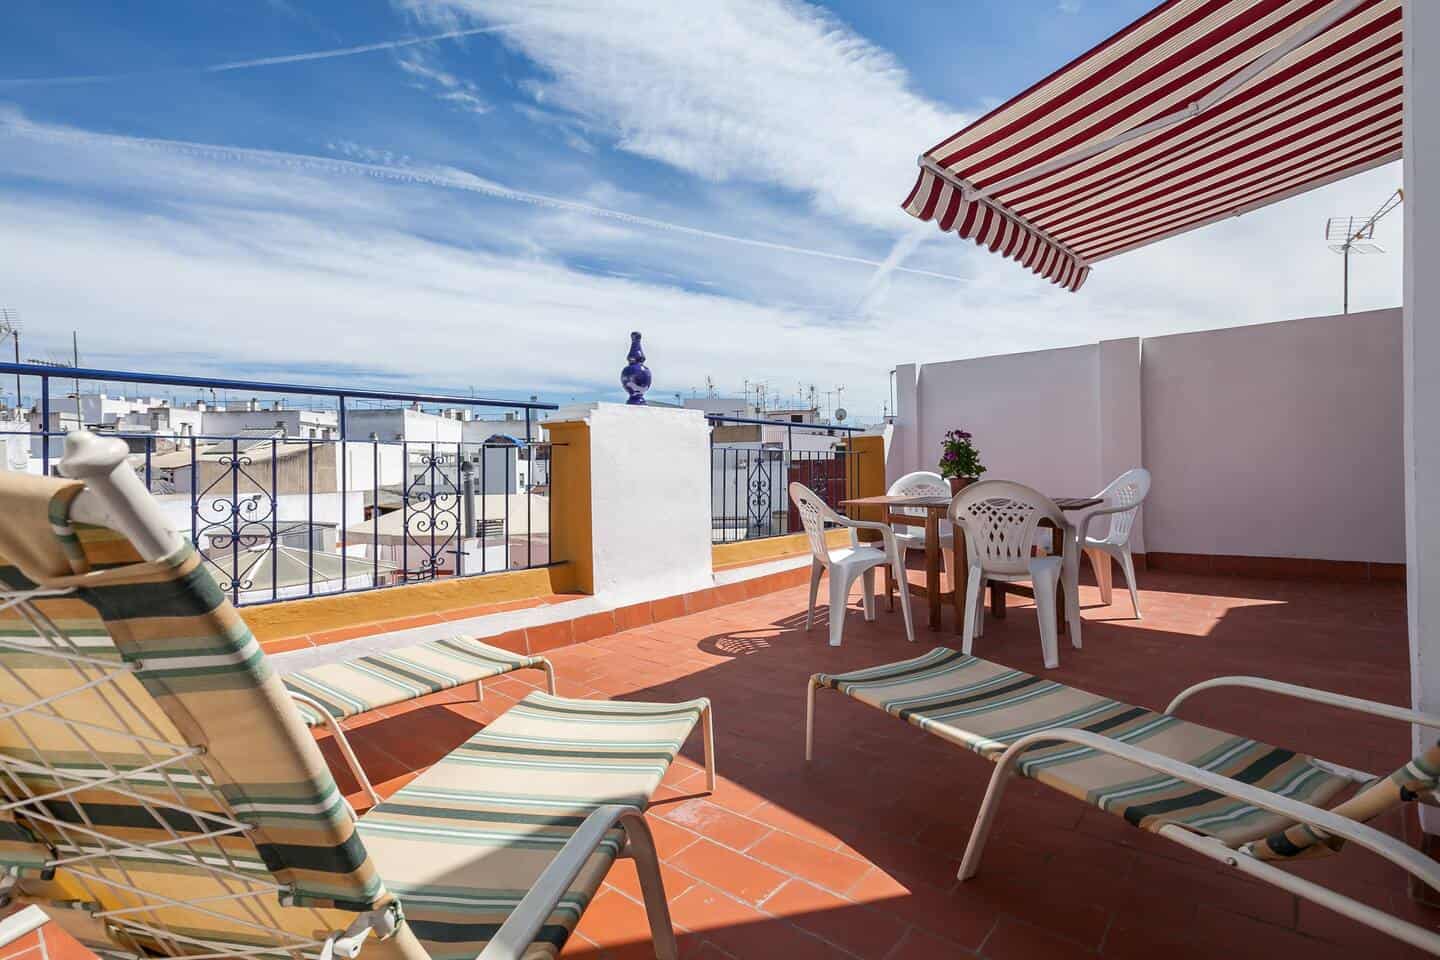 Image of Airbnb rental in Seville, Spain